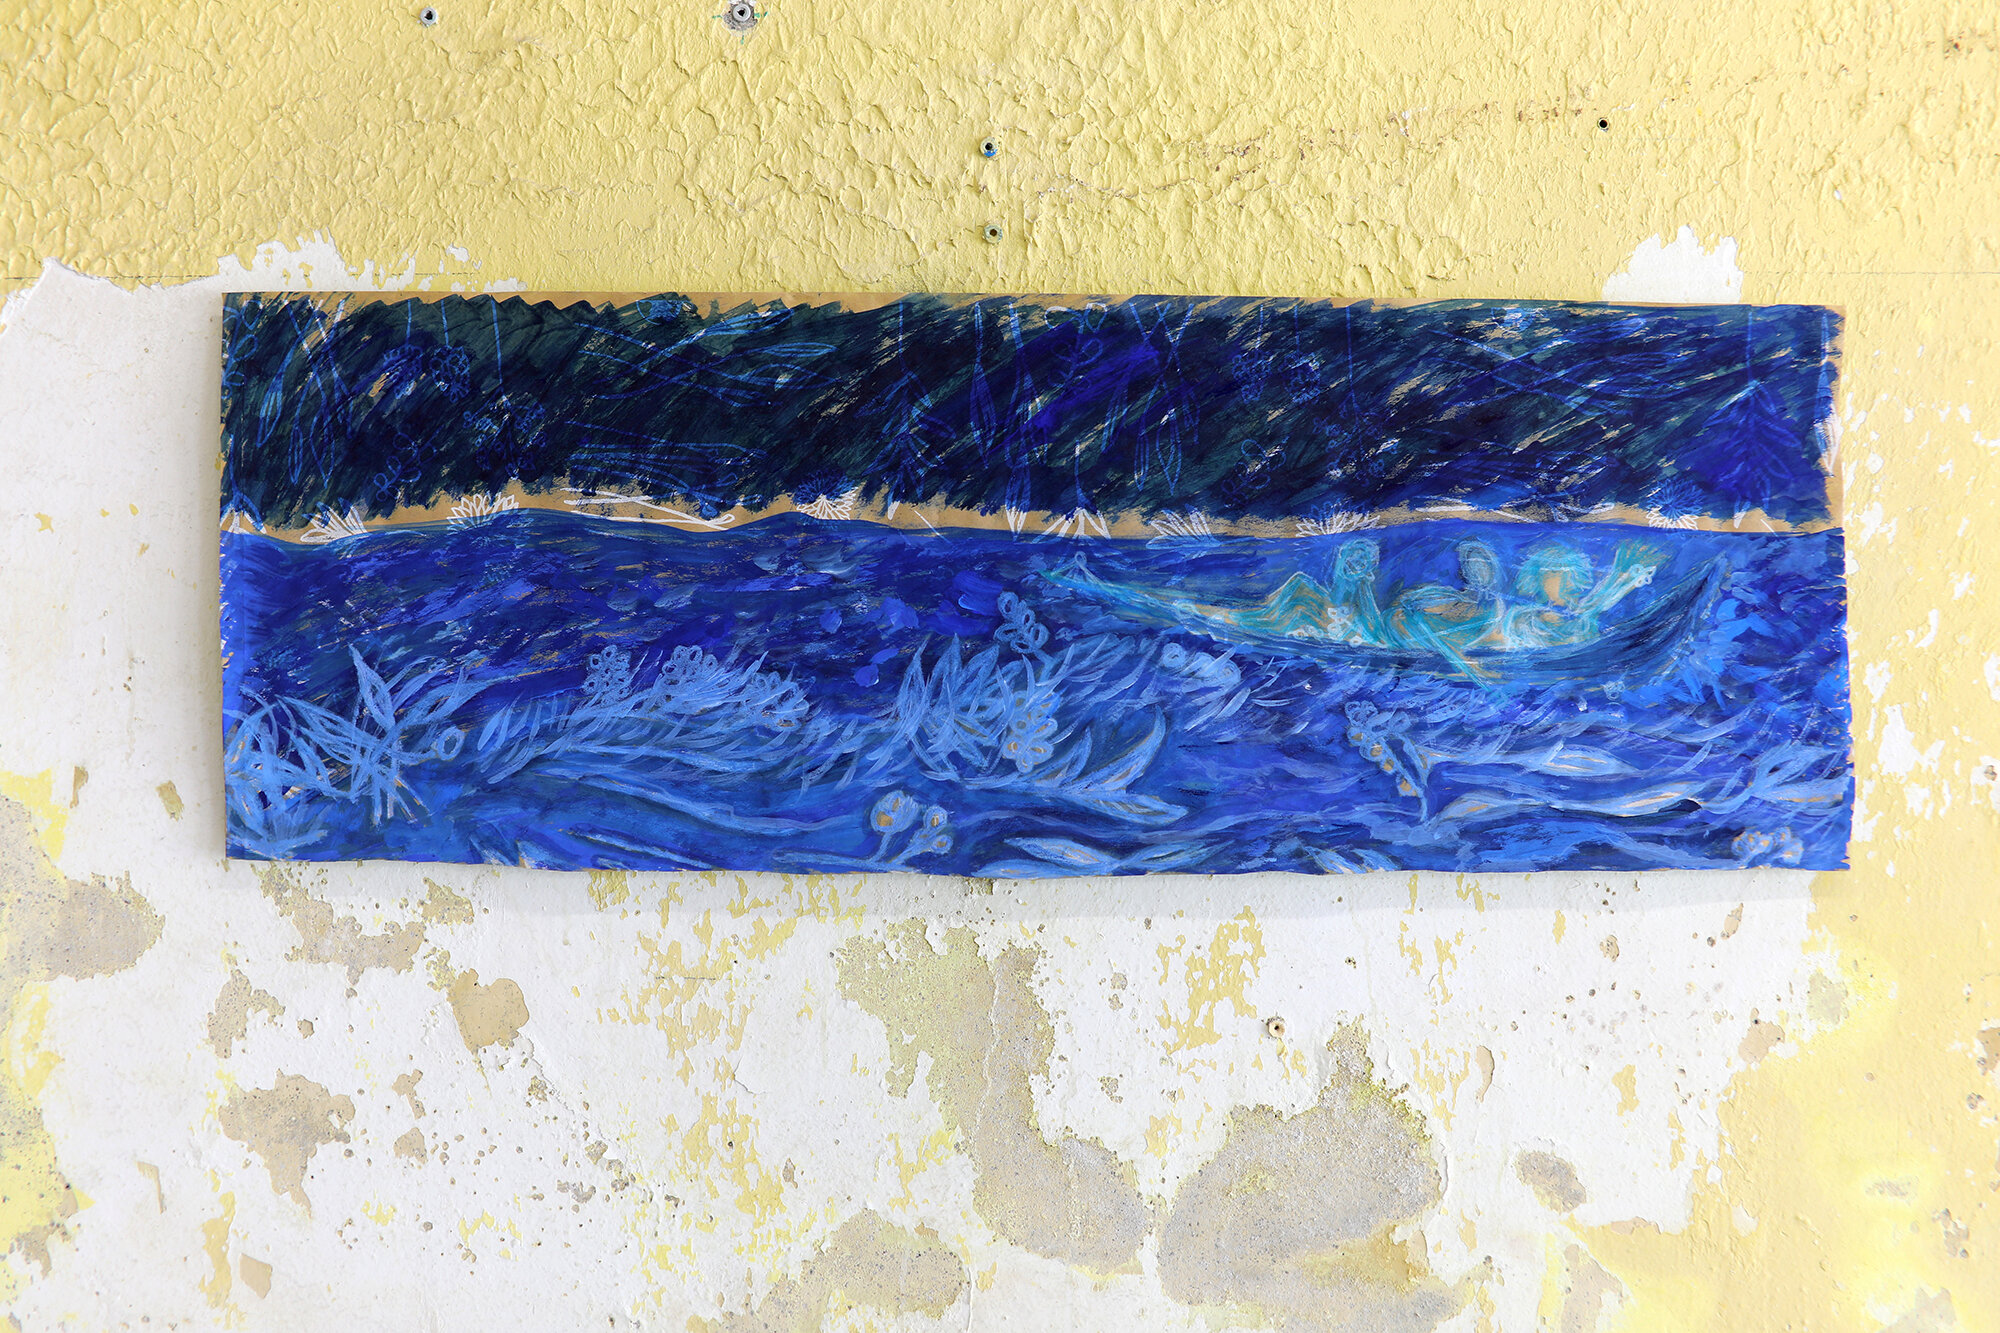   “En barque, ciel sans étoiles”, (« On boat, starless sky ») , 2020, pigment and fish glue, 93x33cm 